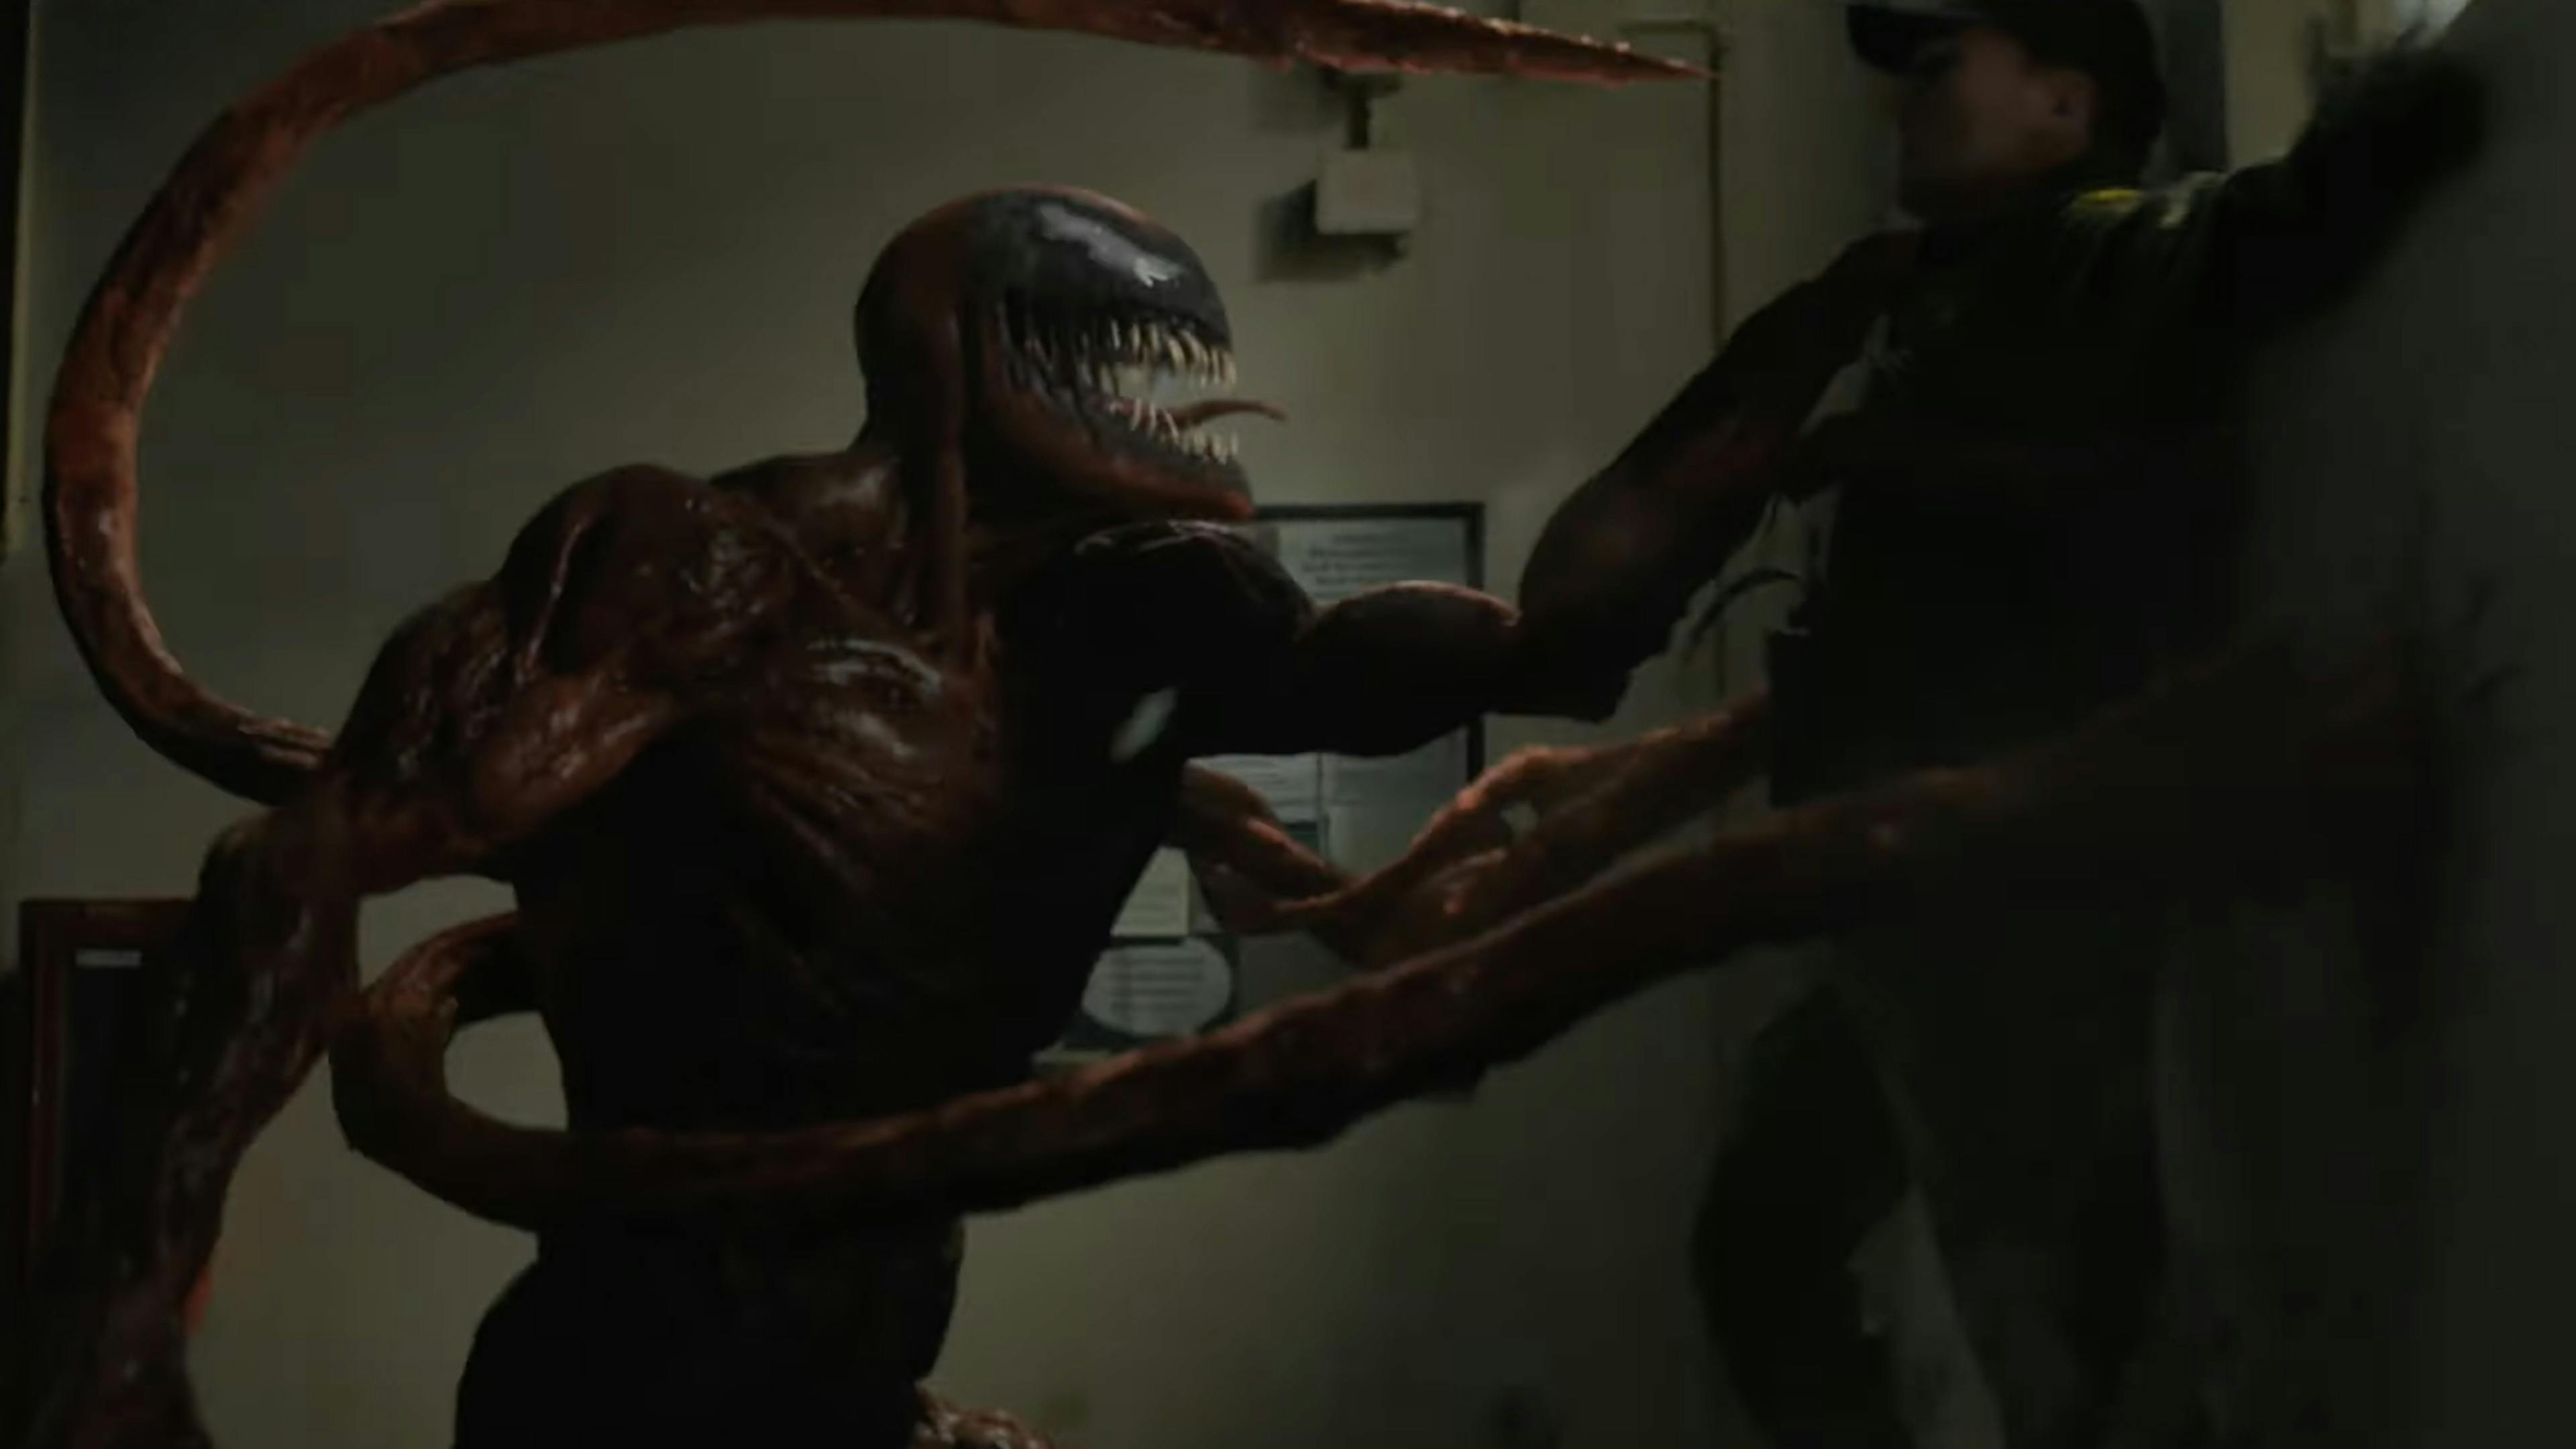 The brand-new Venom trailer is full of Carnage